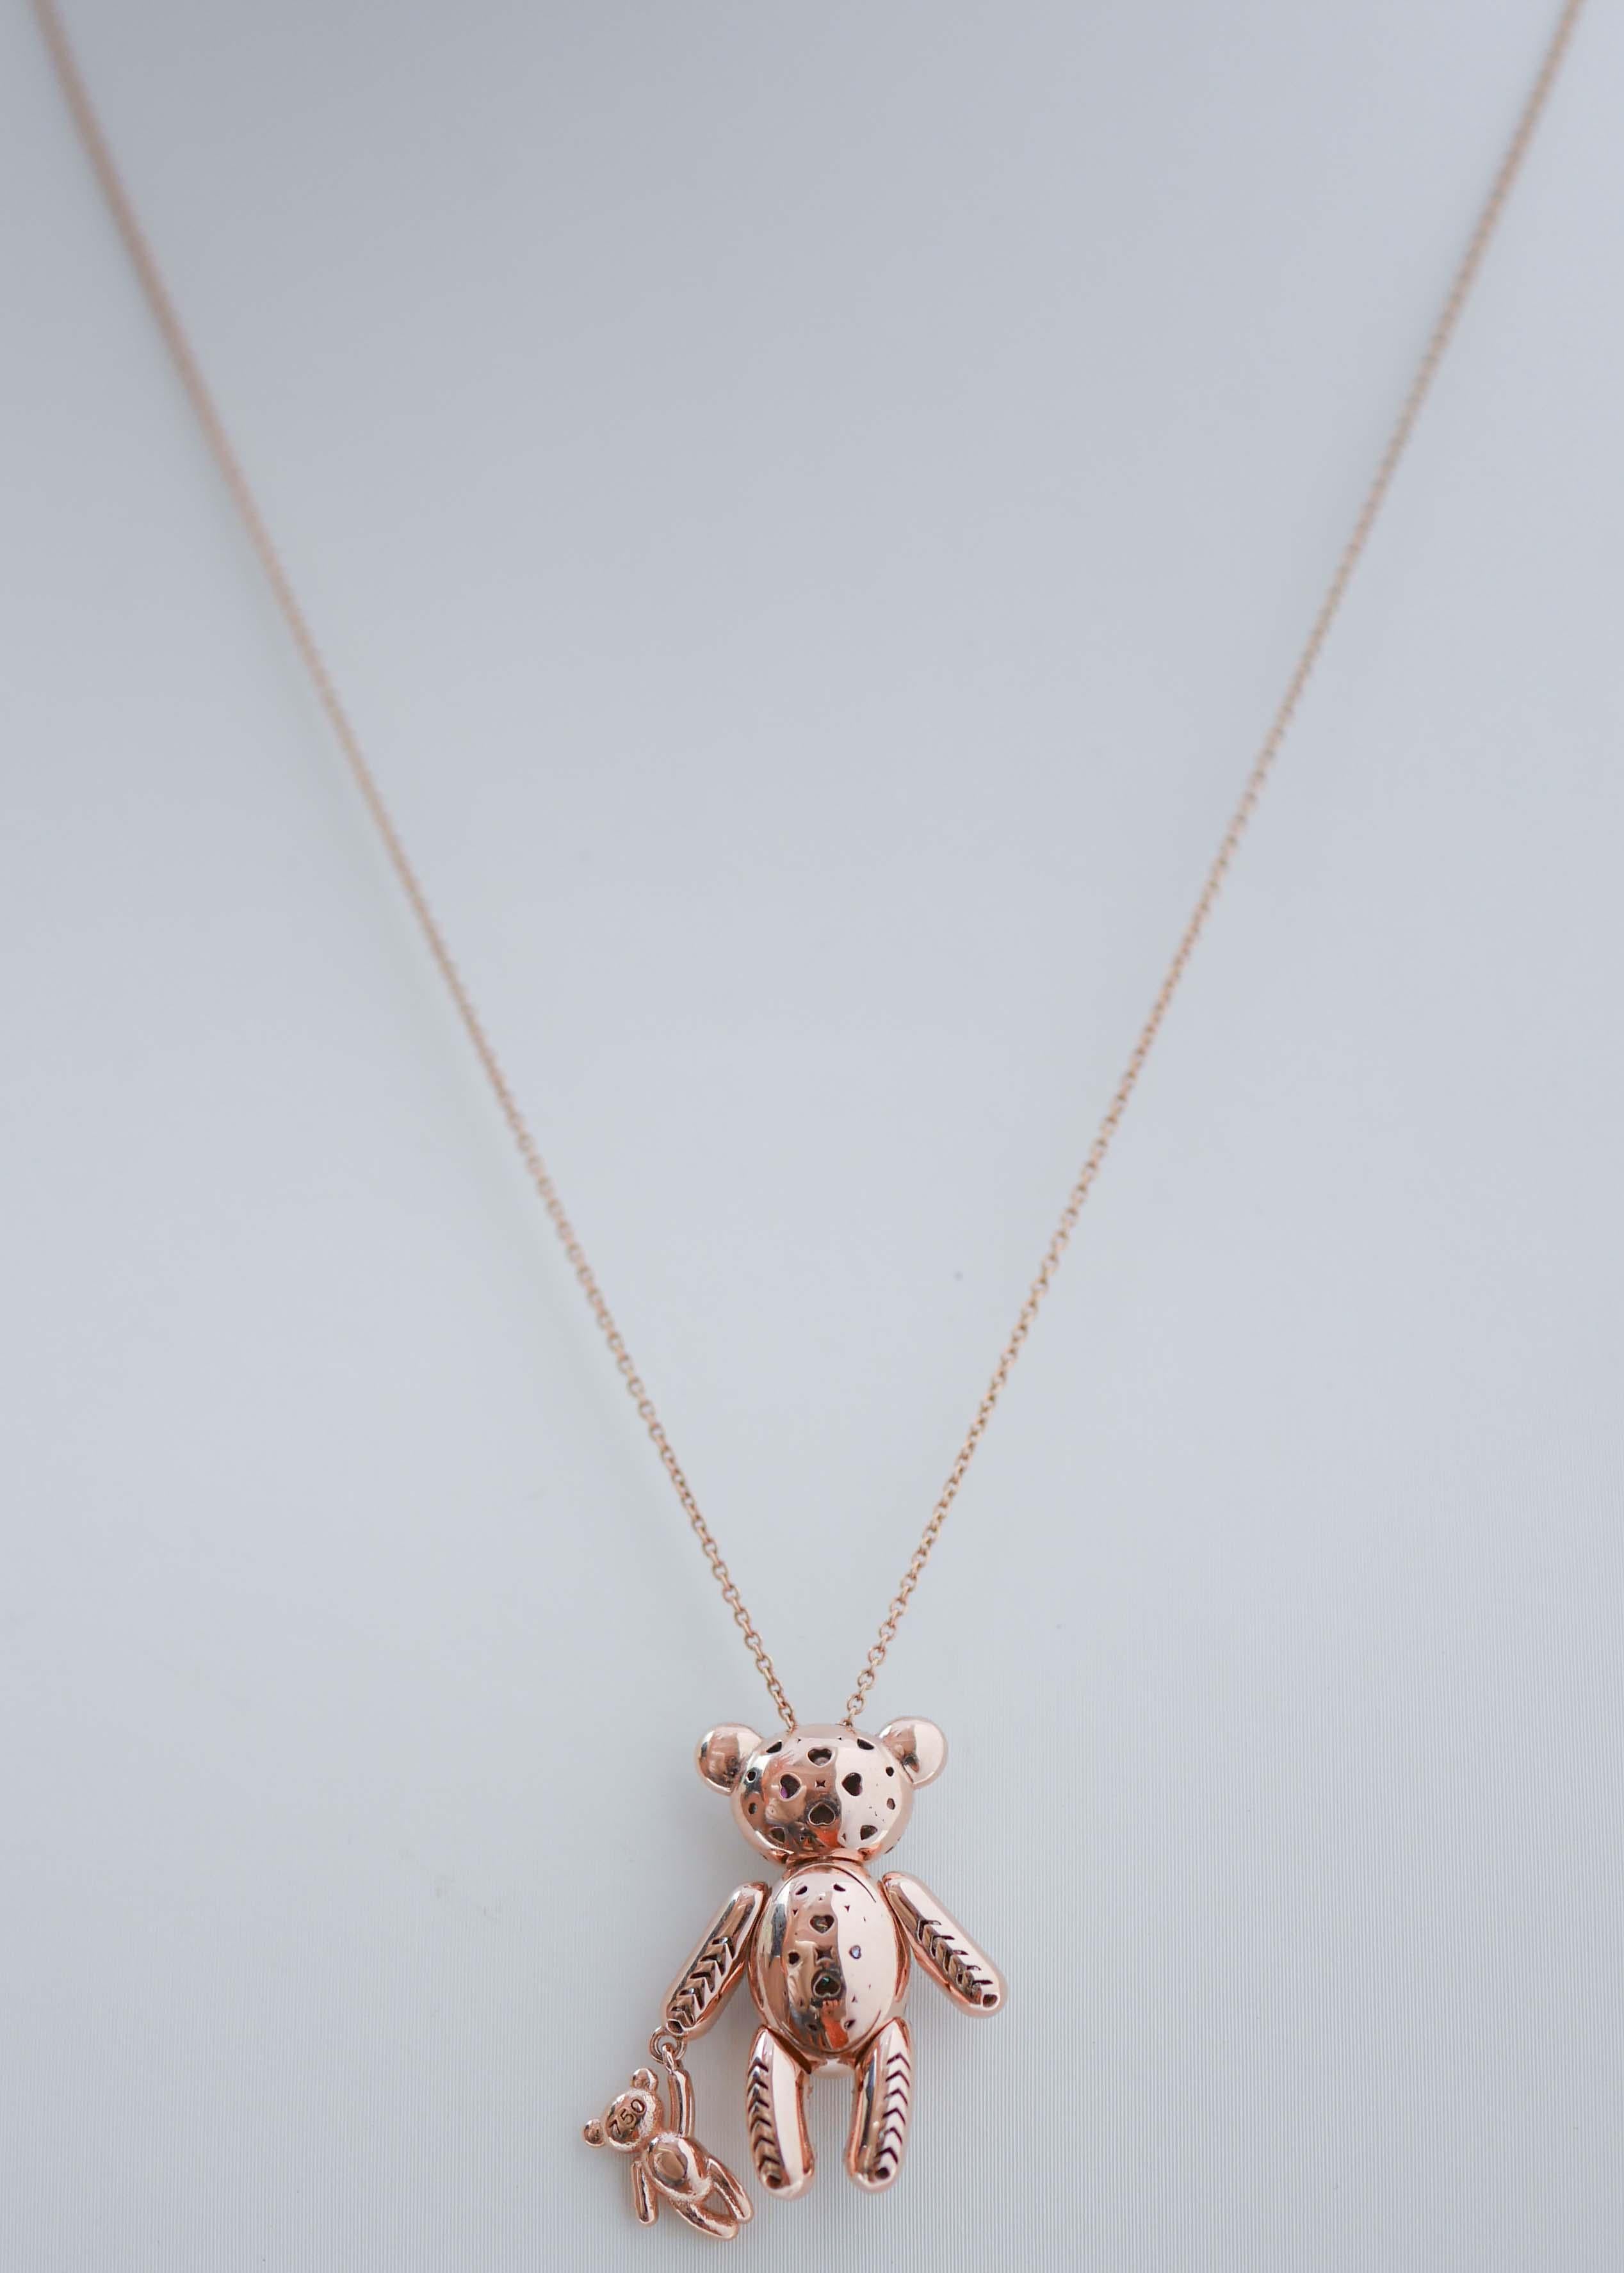 Mixed Cut Big Teddy Rubies, Diamonds, 18 Karat Rose Gold Pendant Necklace For Sale